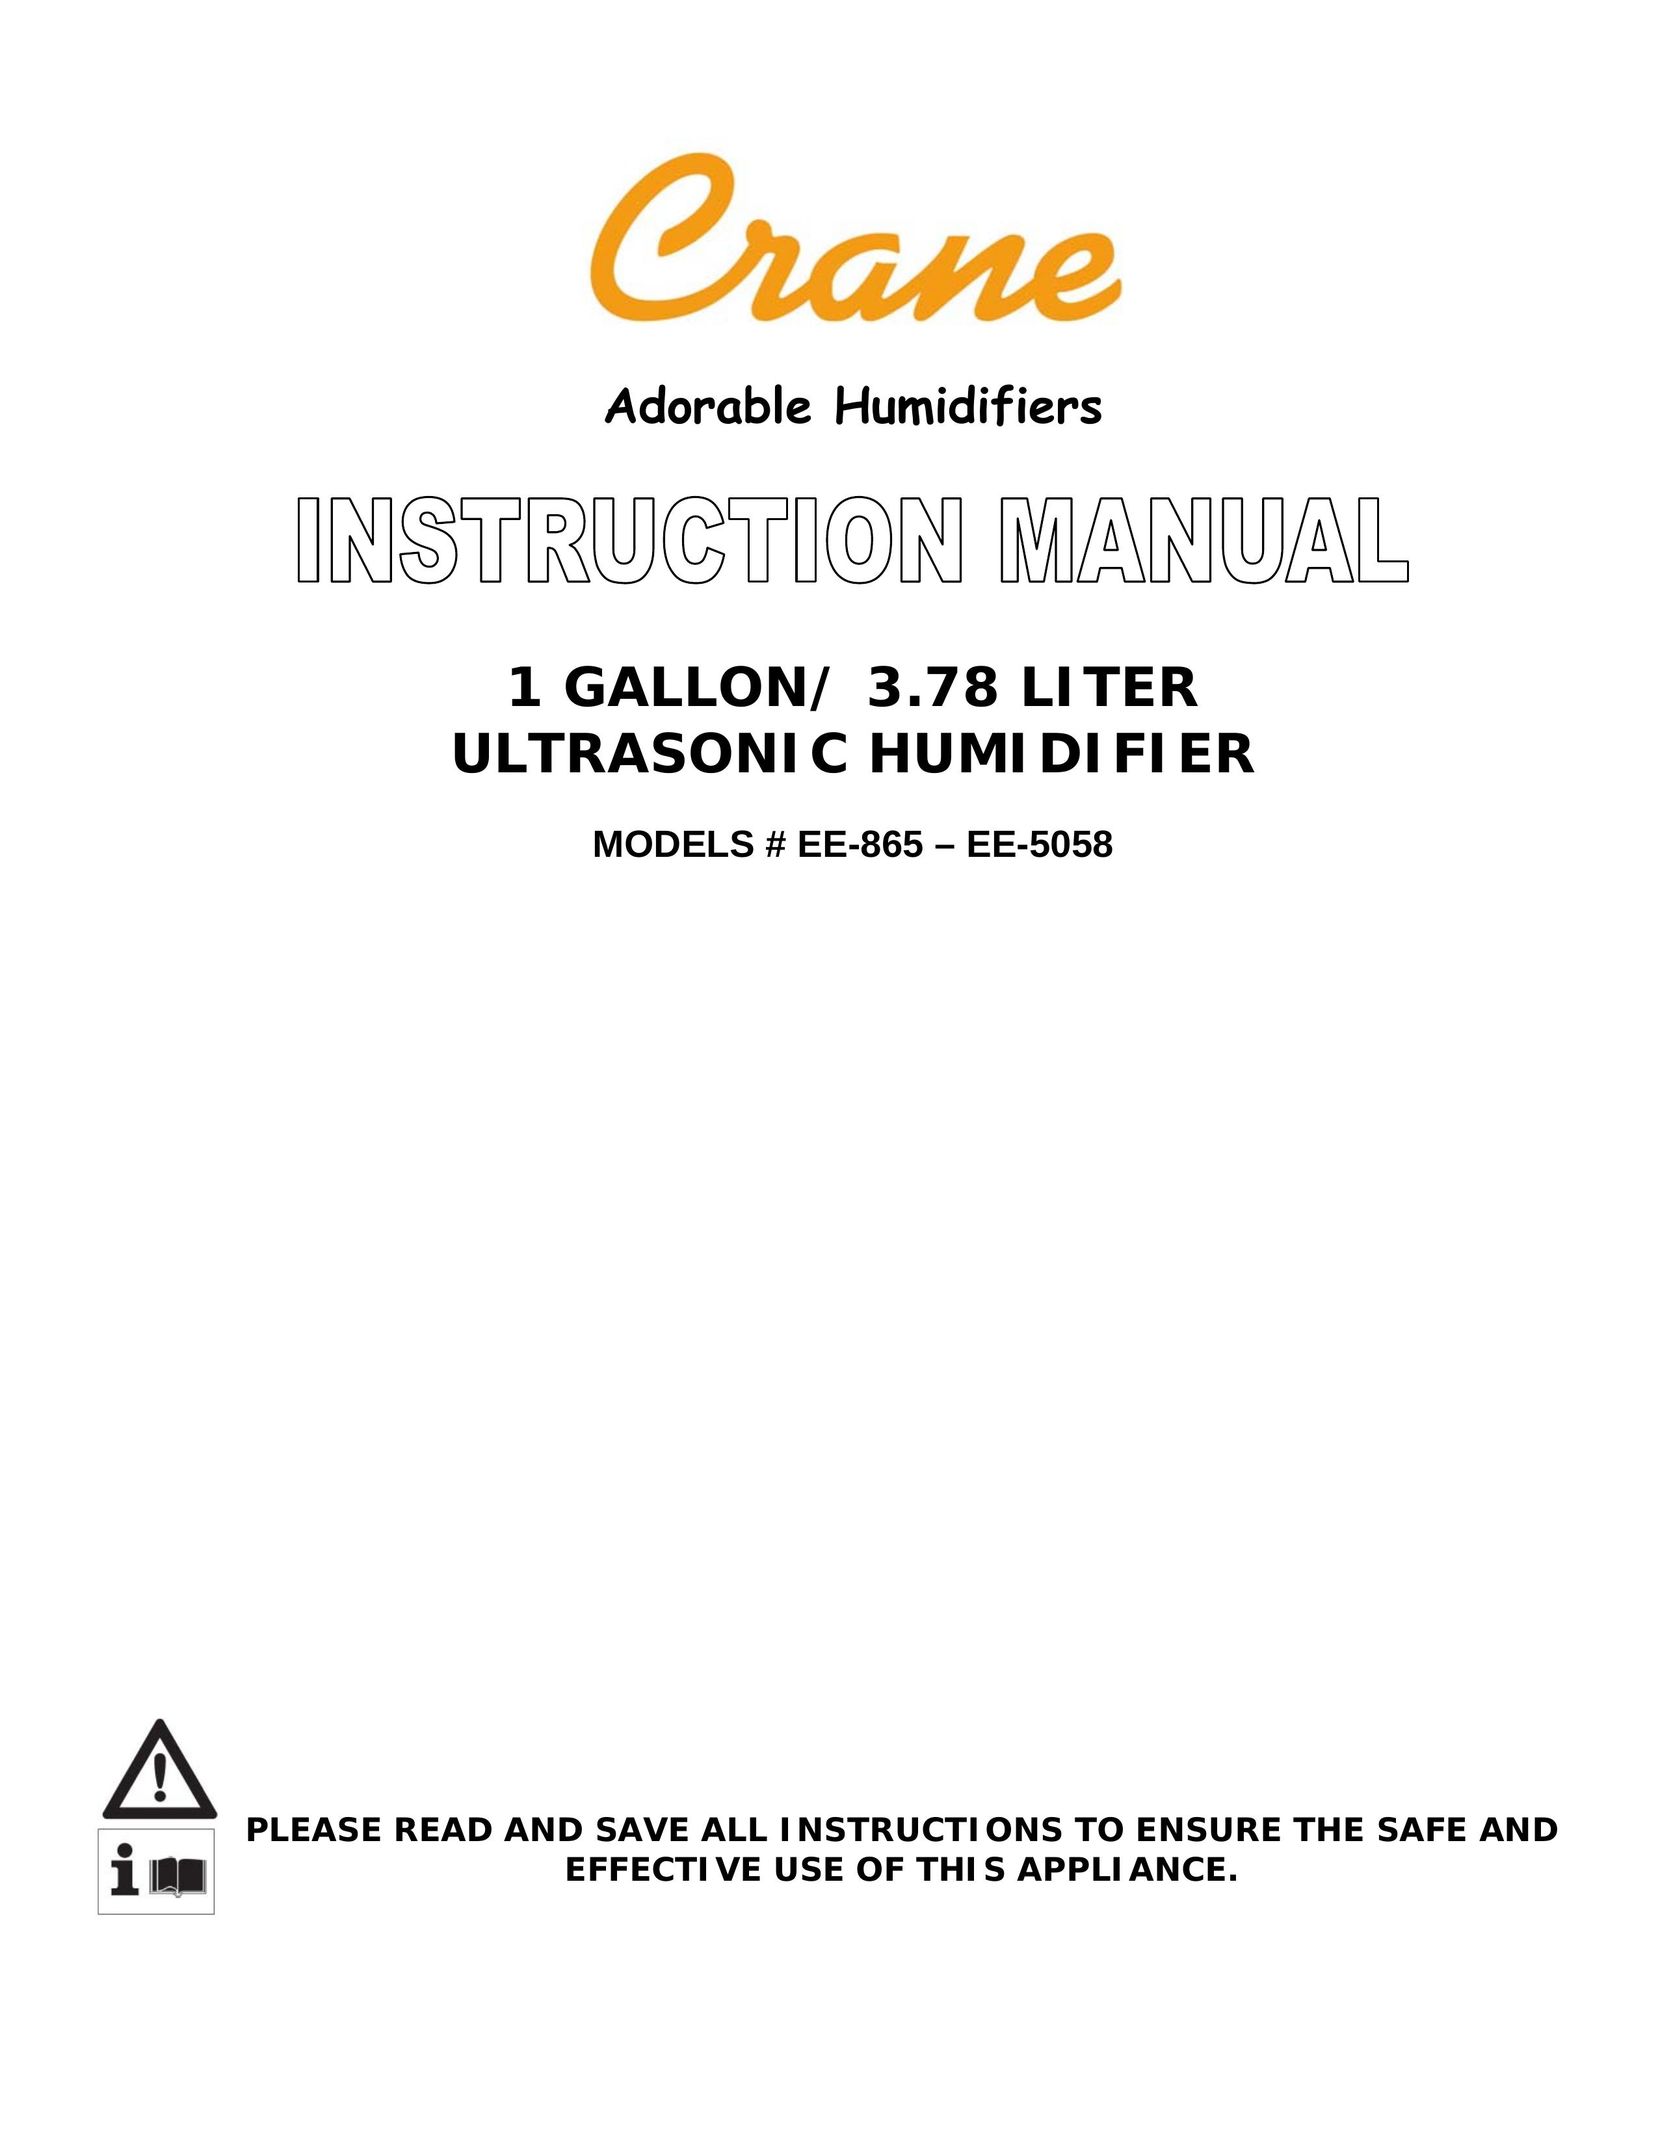 Crane EE-865 Humidifier User Manual